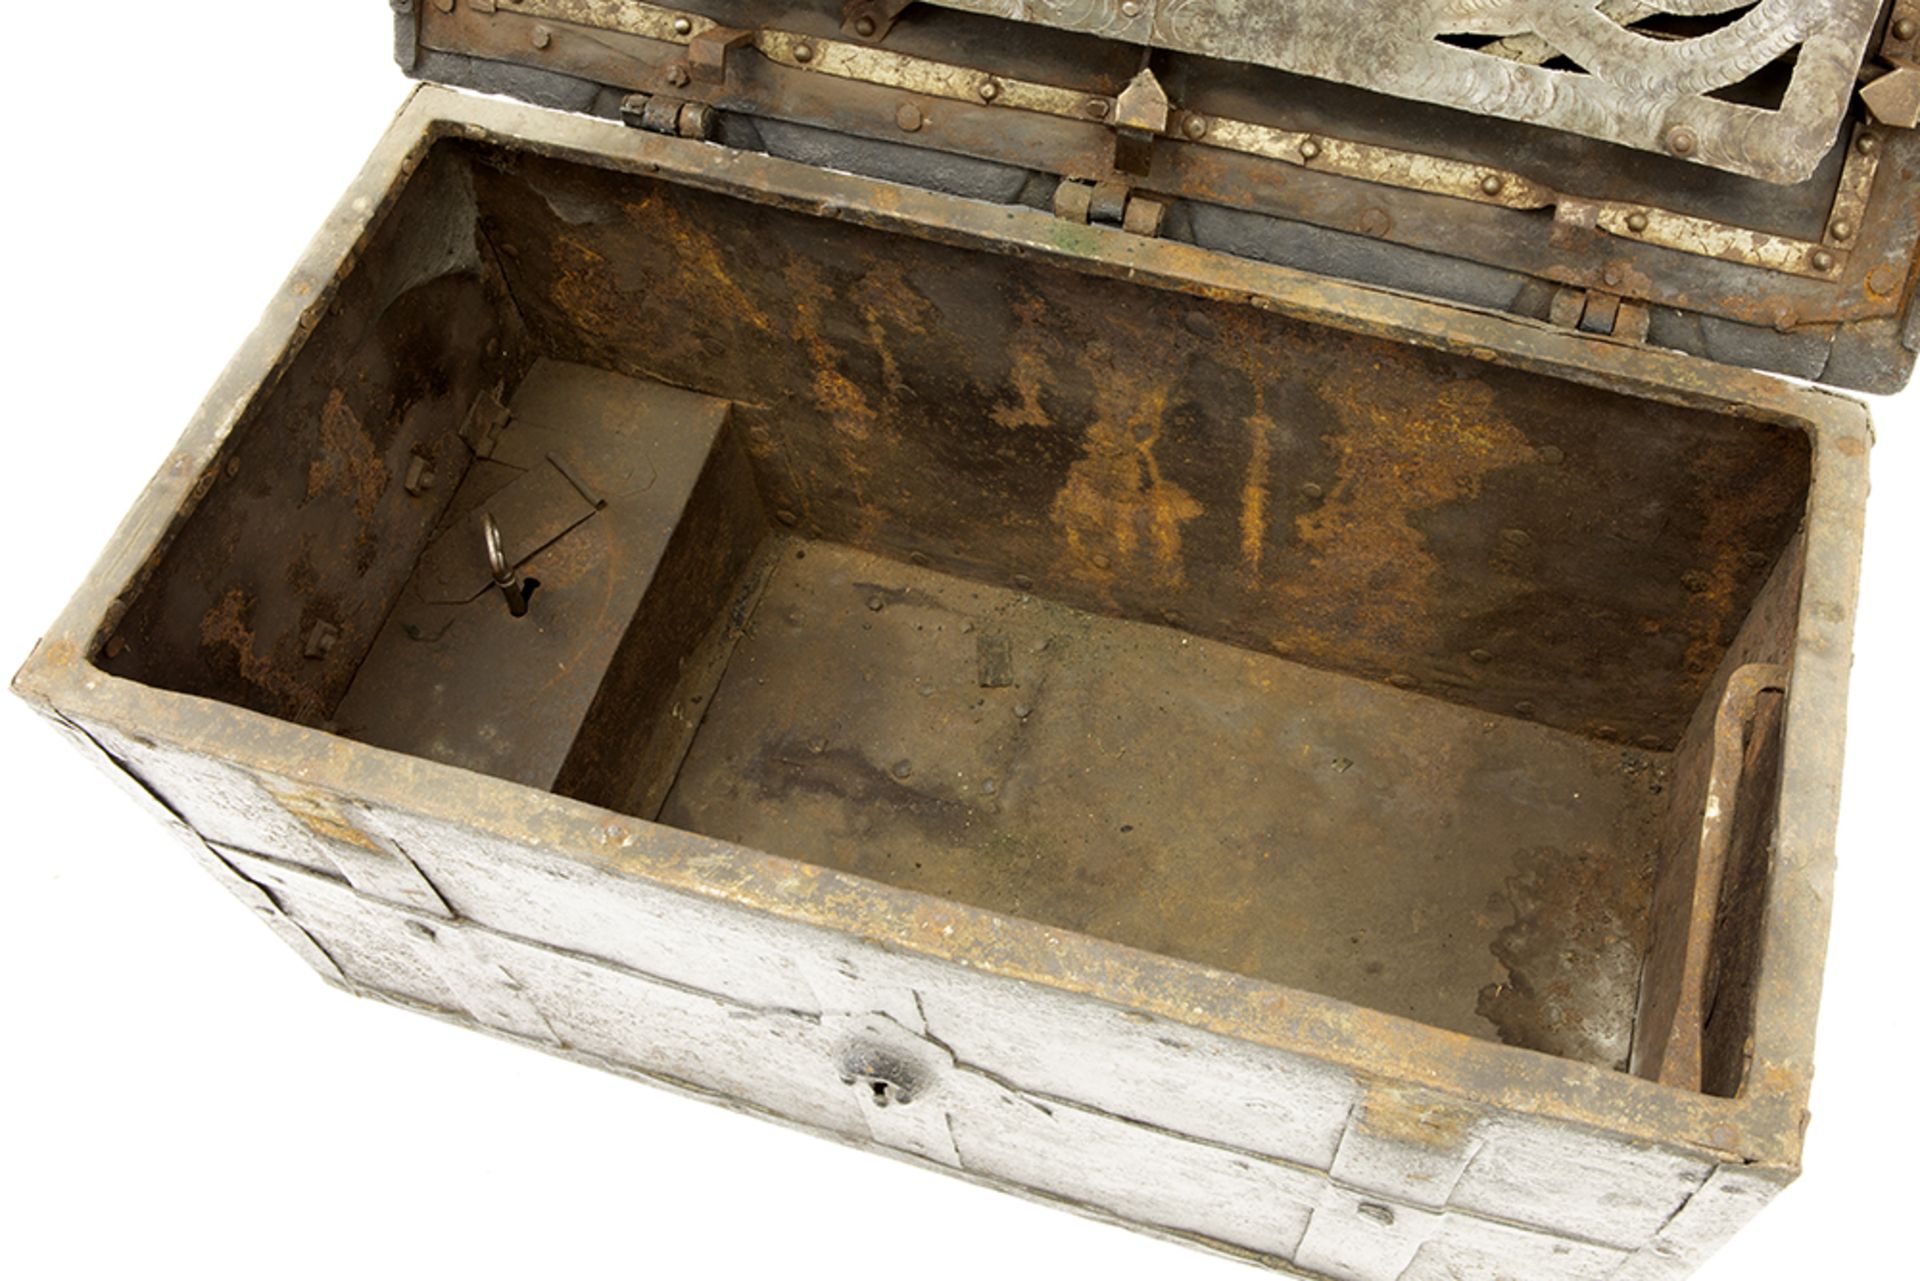 17th/18th Cent. iron chest with a nice lock || Zeventiende/achttiende eeuwse ijzeren kist met een - Image 3 of 4